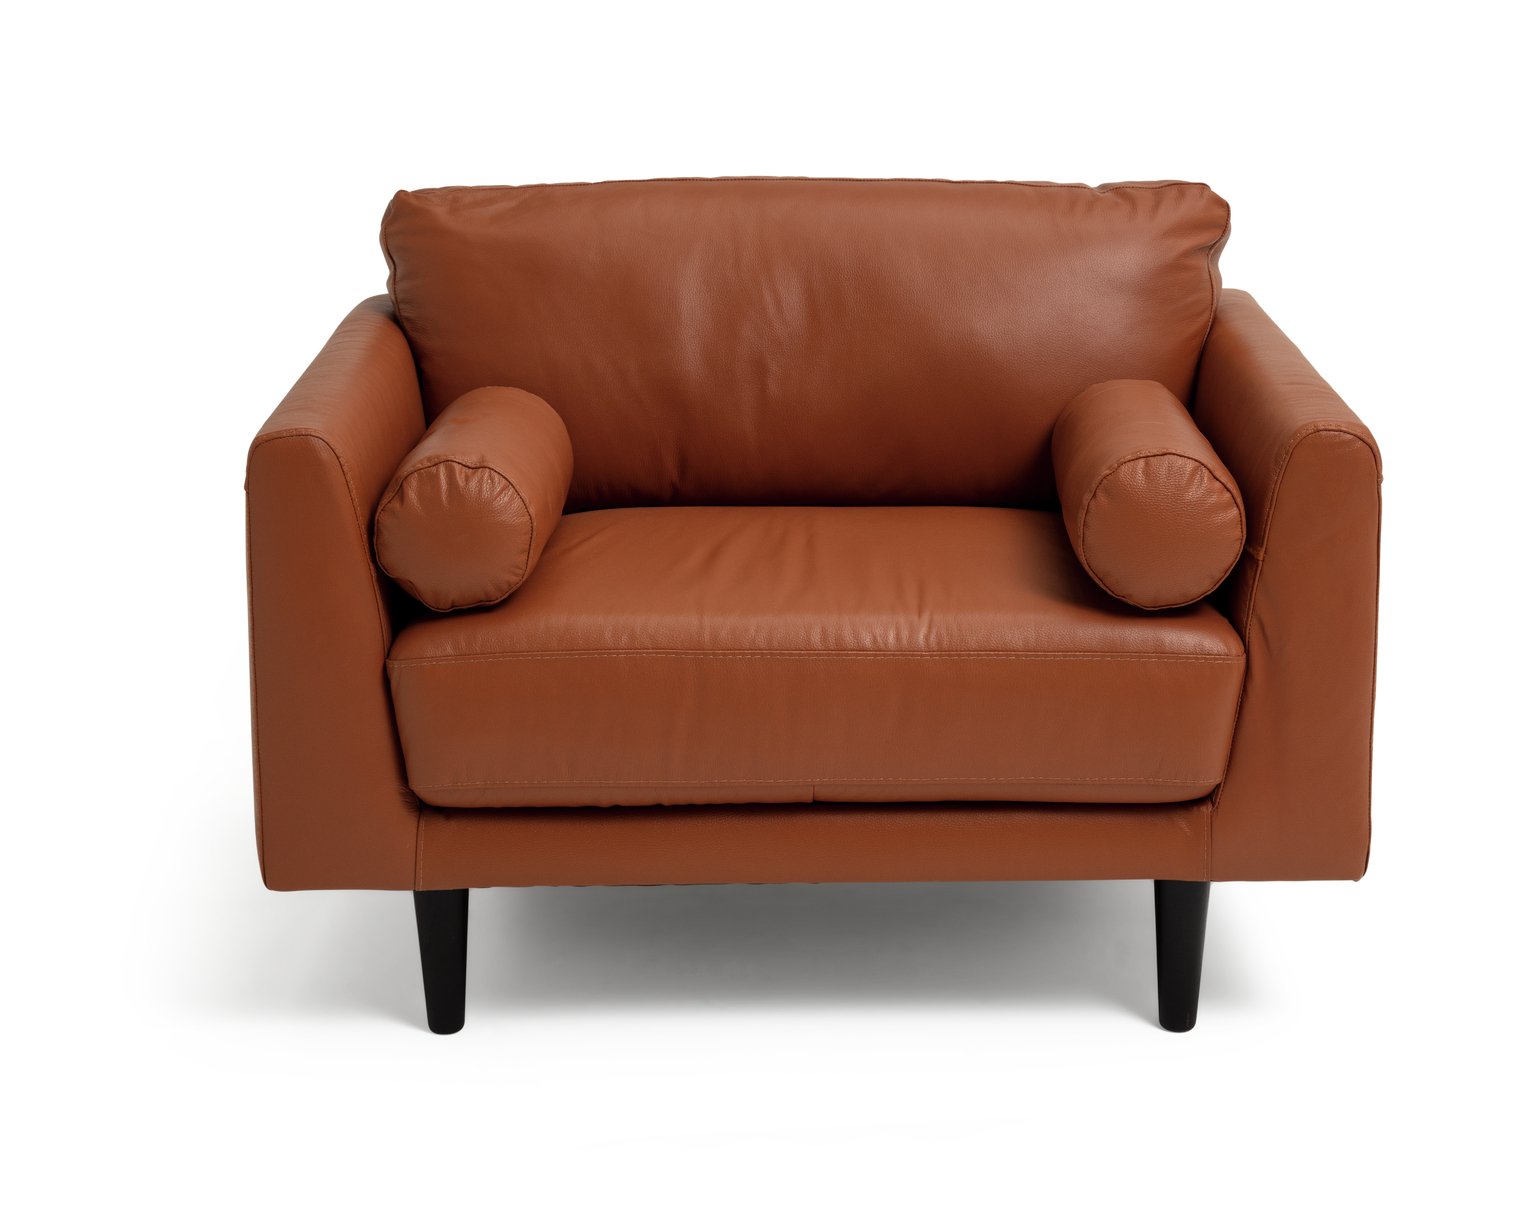 Habitat Jackson Leather Cuddle Chair - Tan